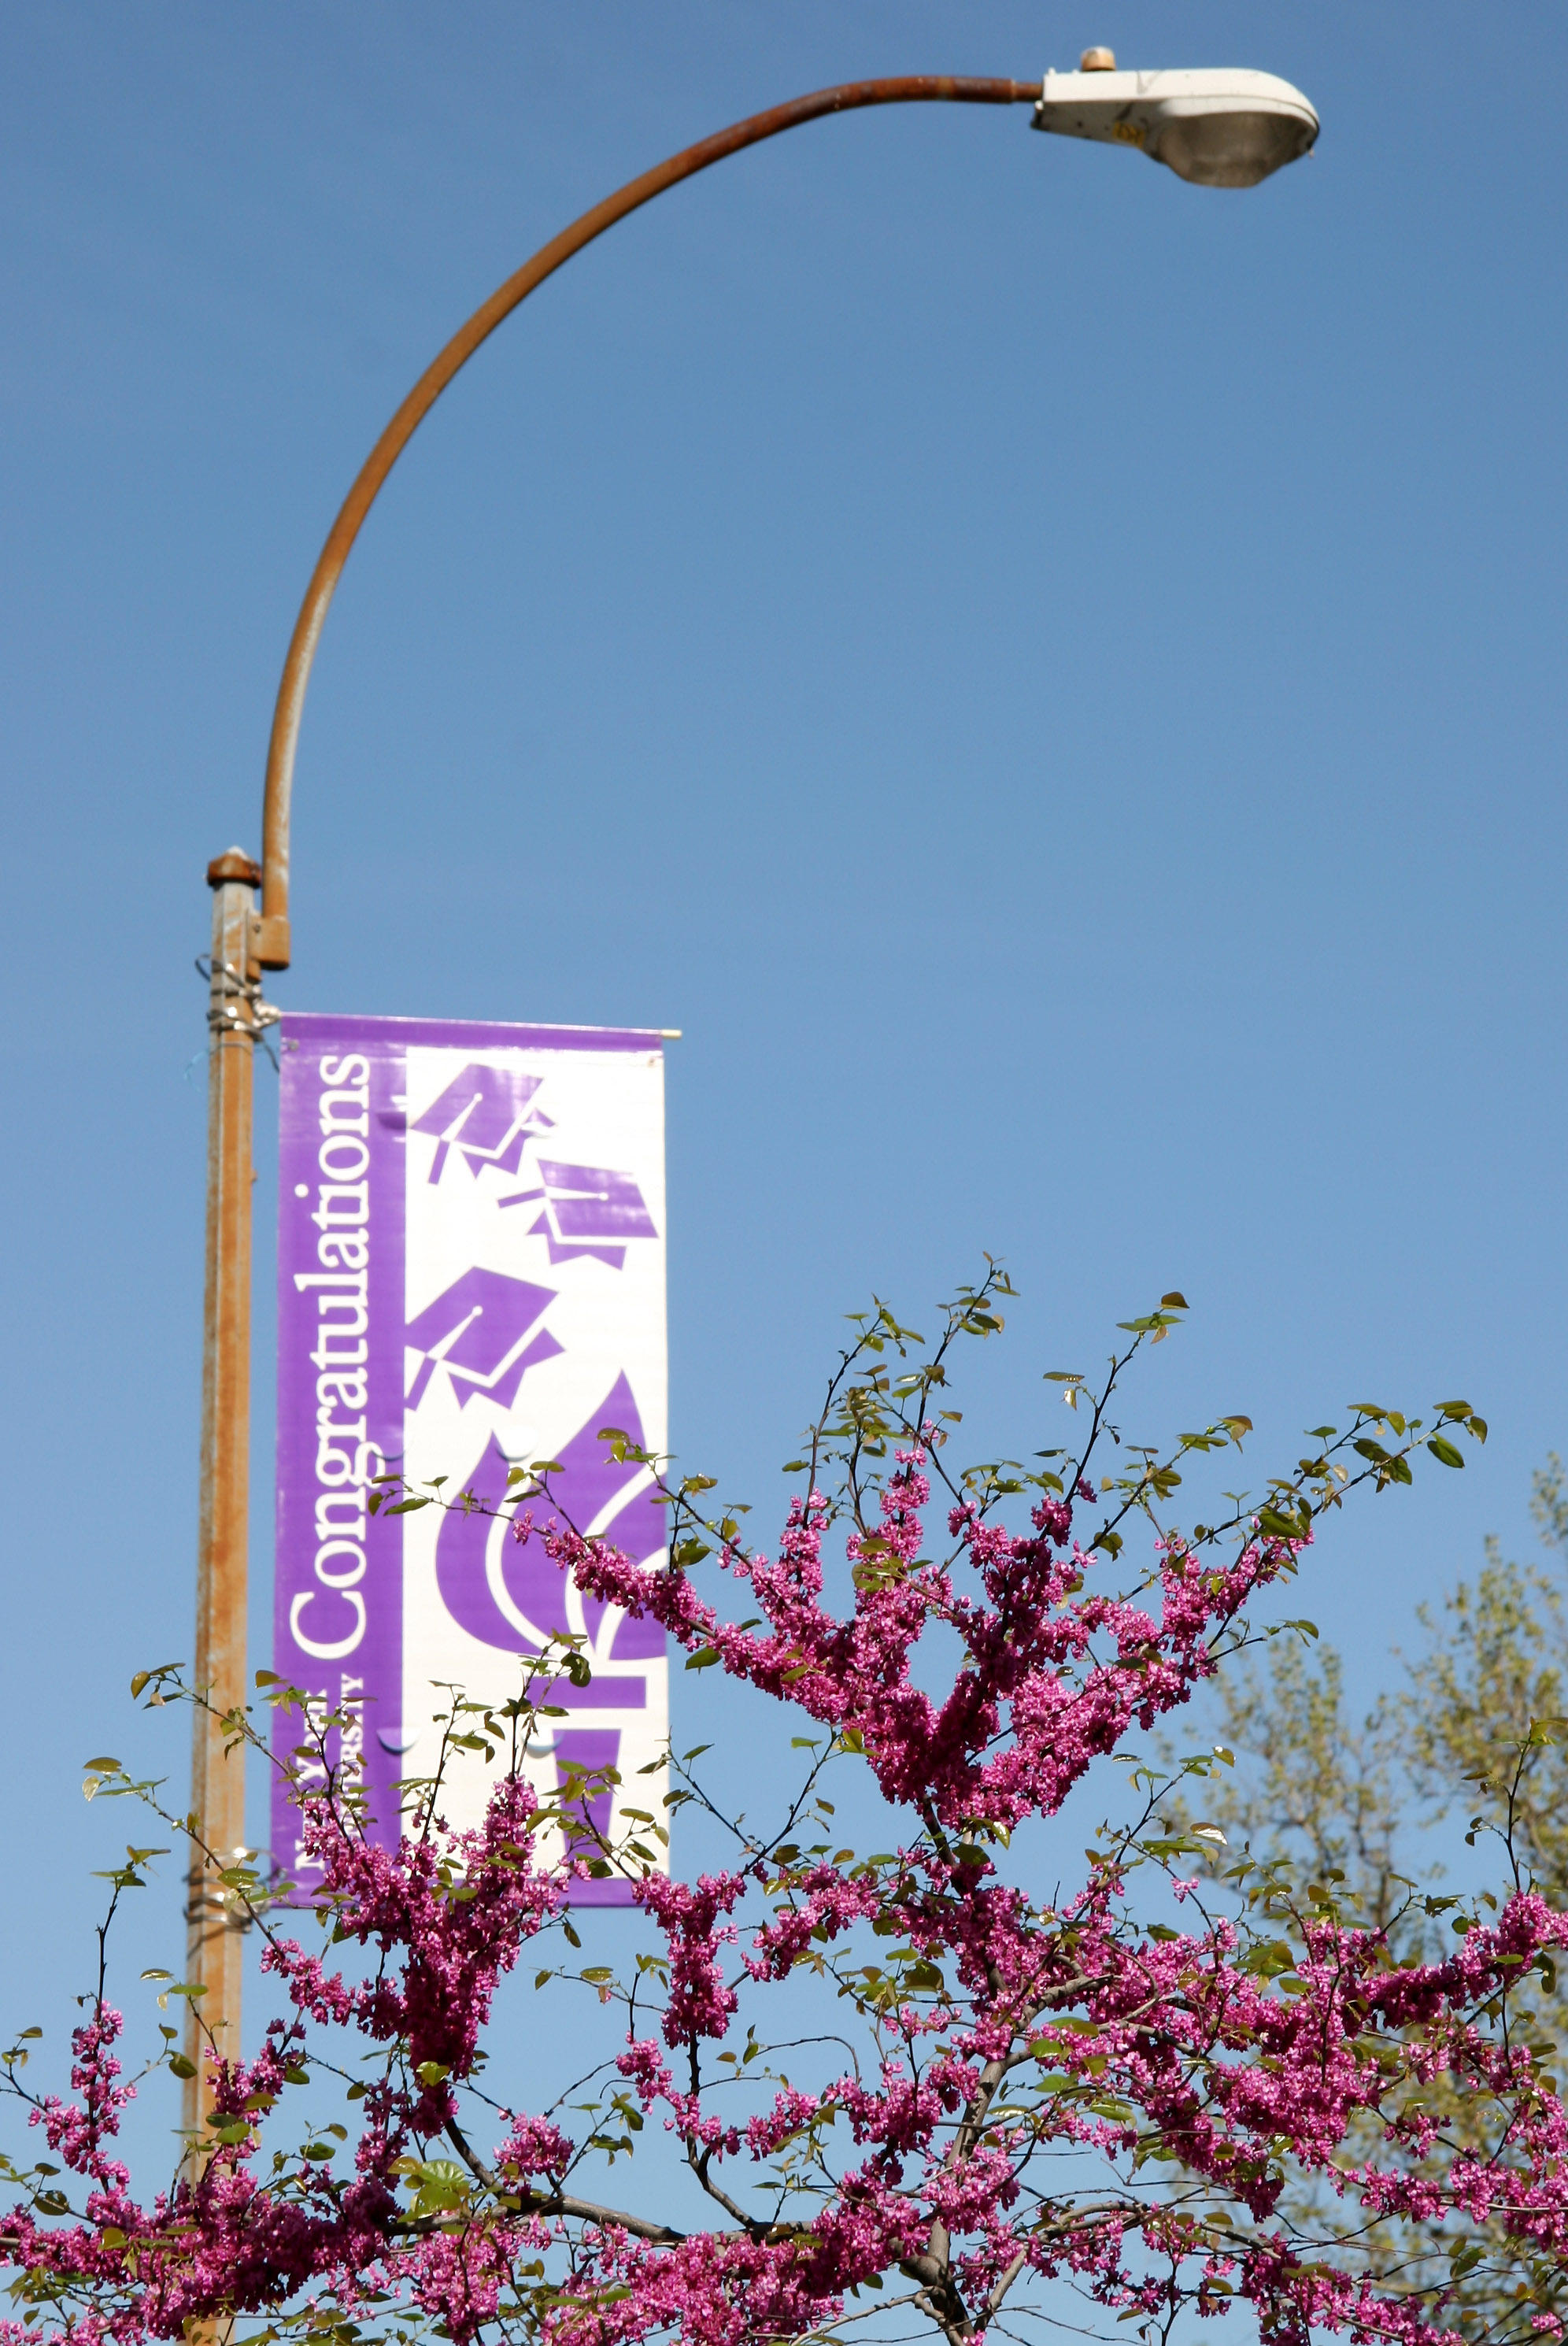 NYU Graduation Banner & Cercis Tree Blossoms